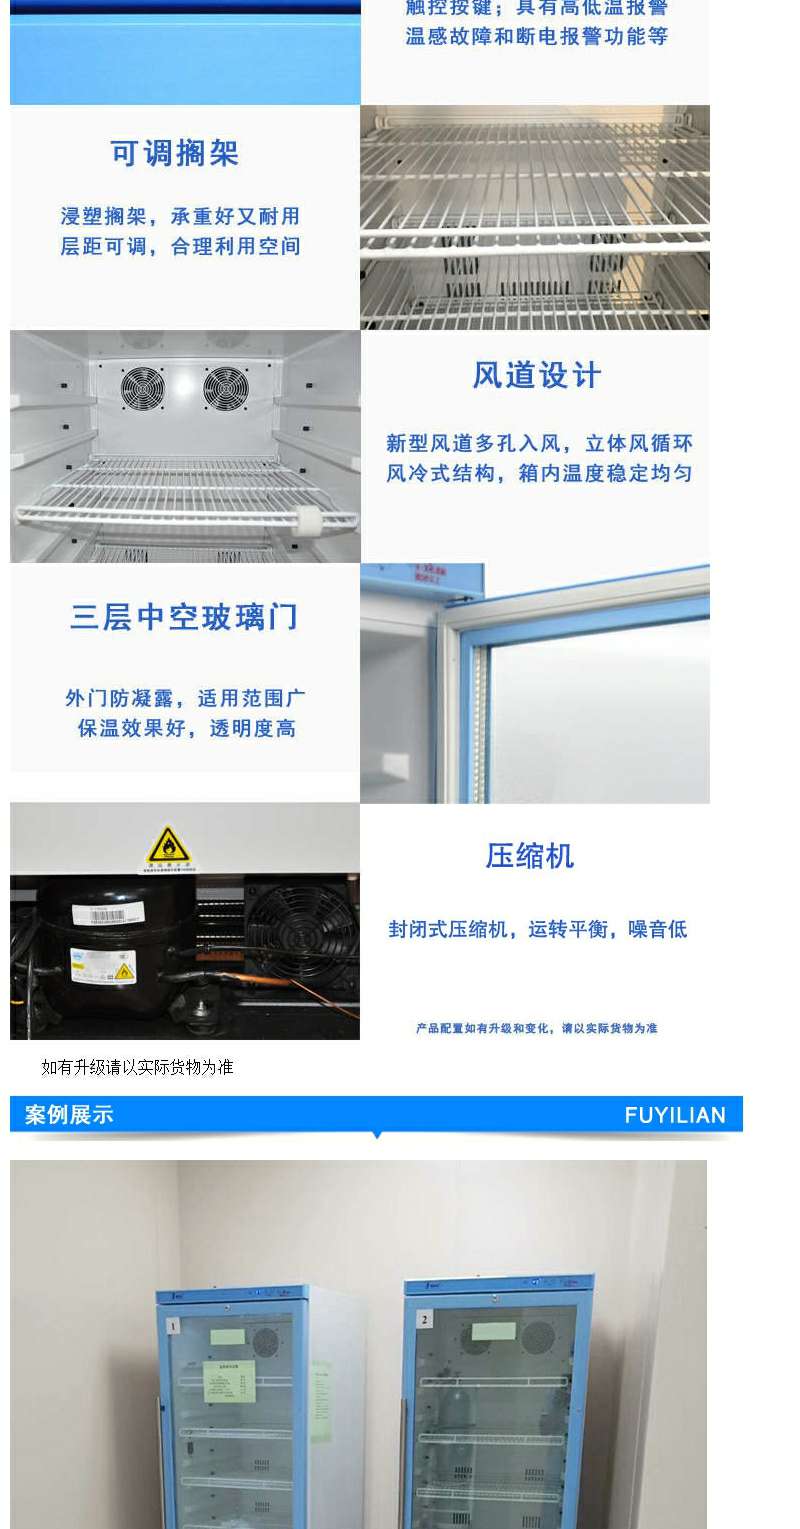 BL 不锈钢保冷柜 600X900 设定温度4度容积65L 必须接地使用